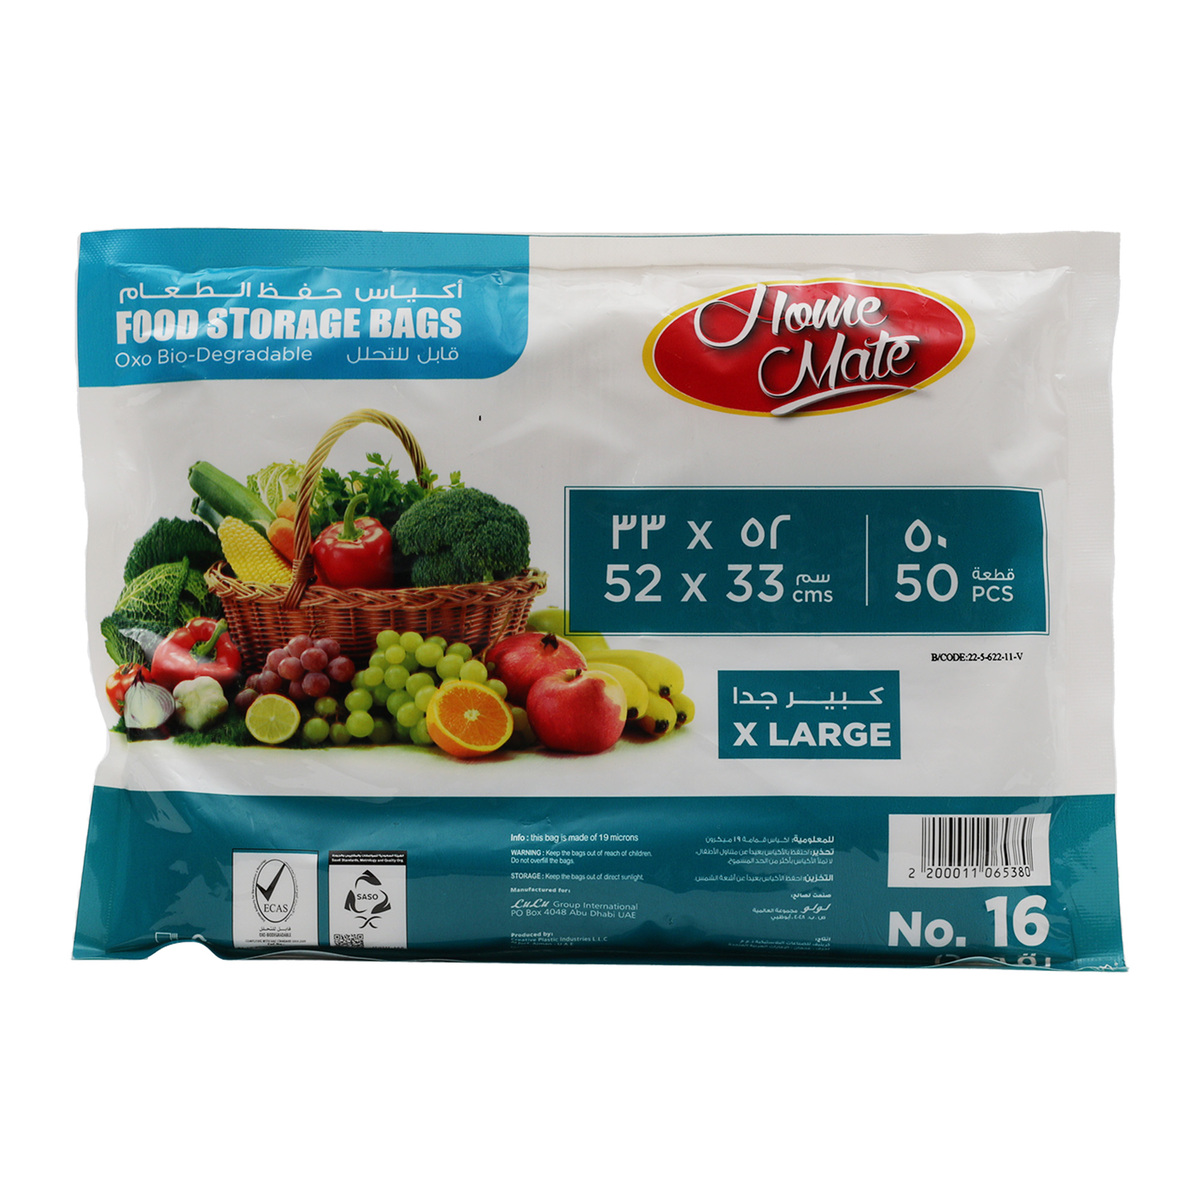 Home Mate Food Storage Bags Size 52 x 33cm X-Large No. 16 50pcs